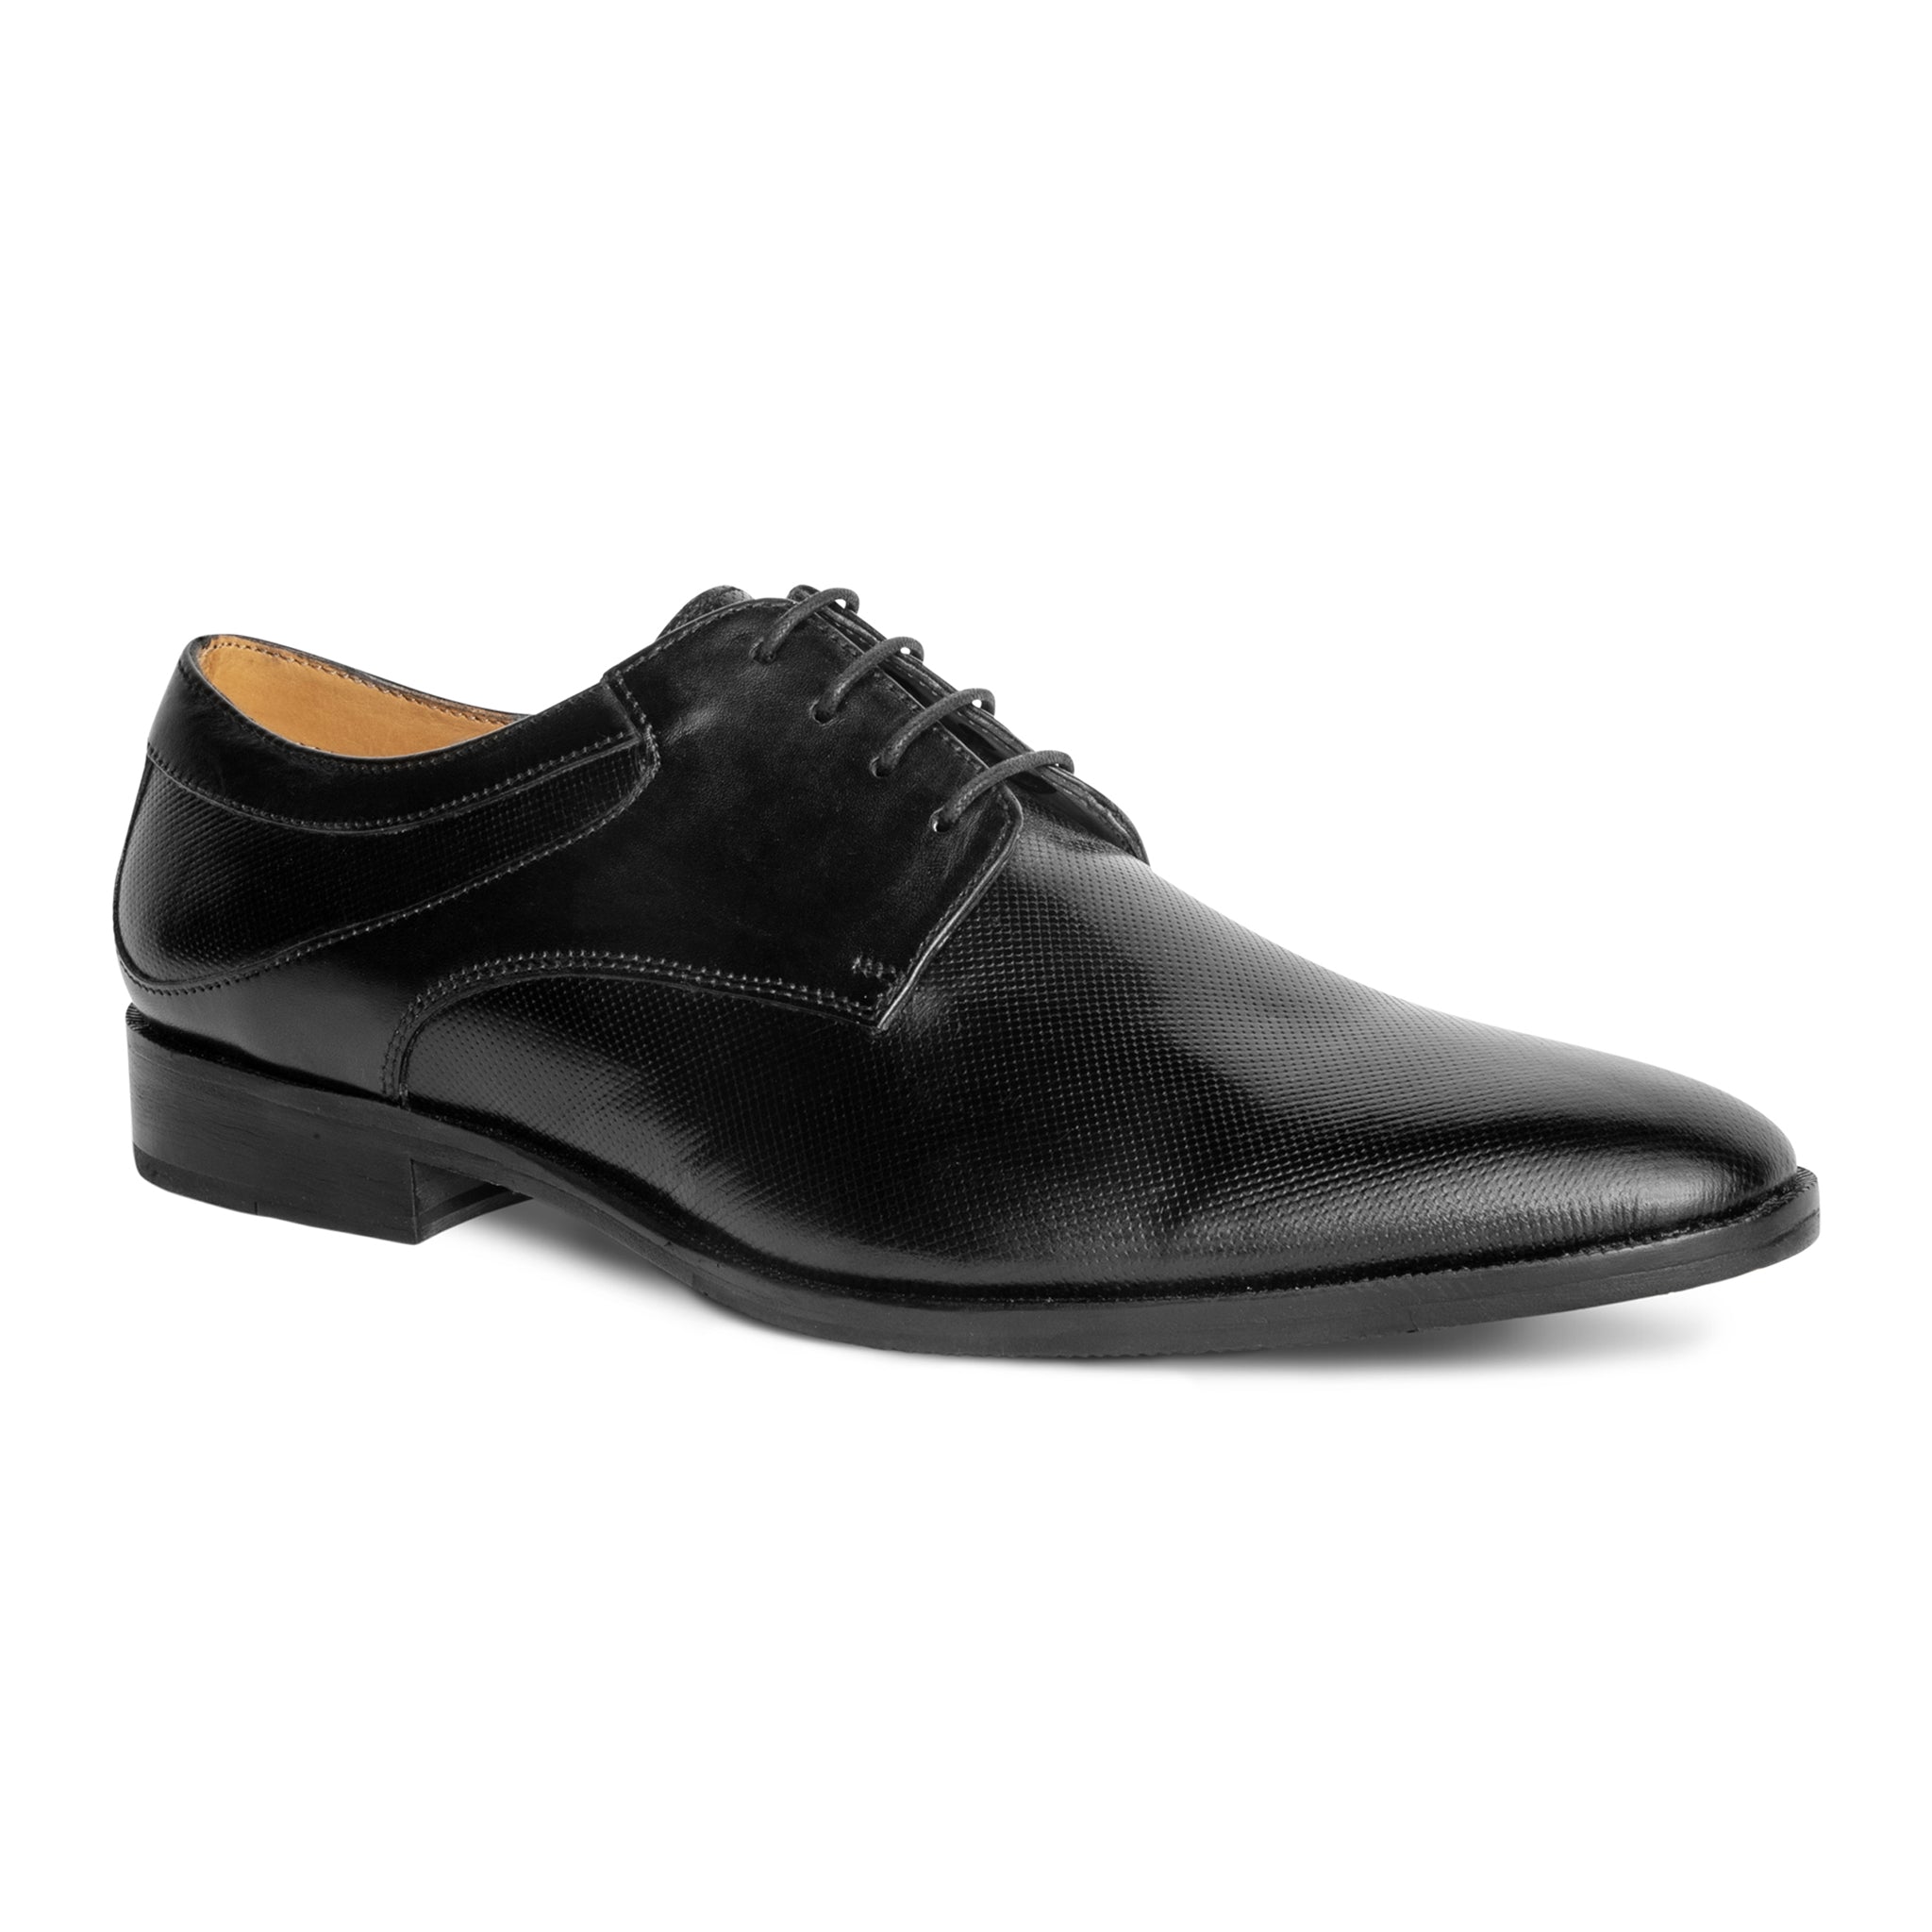 Power Print Oxford shoes black